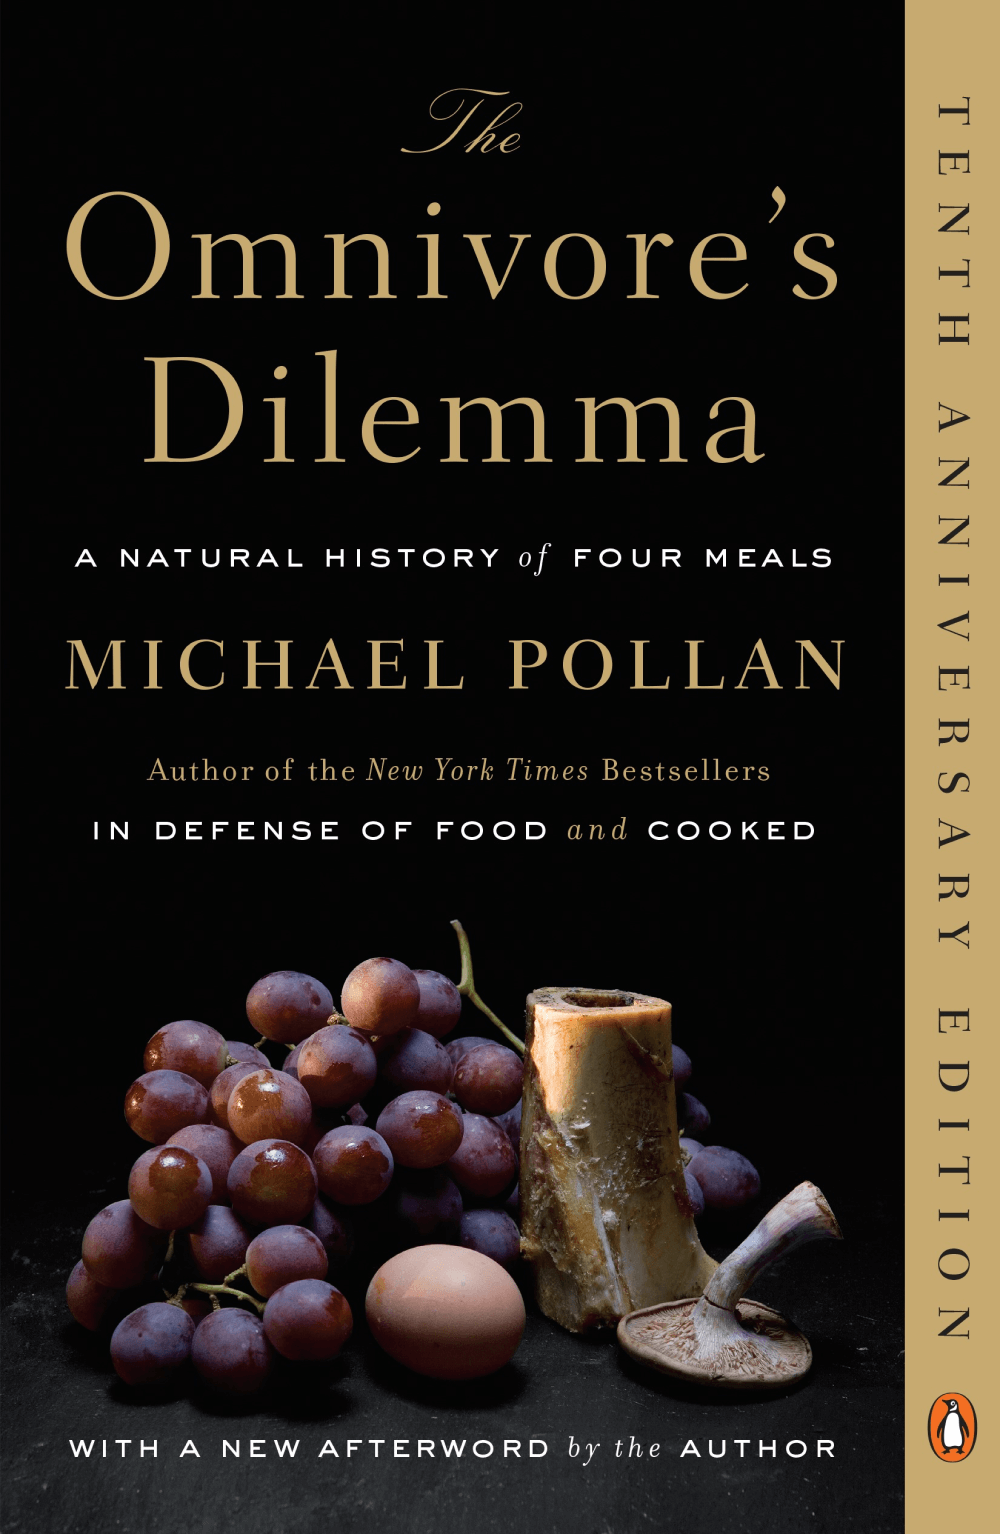 The Omnivore’s Dilemma book cover